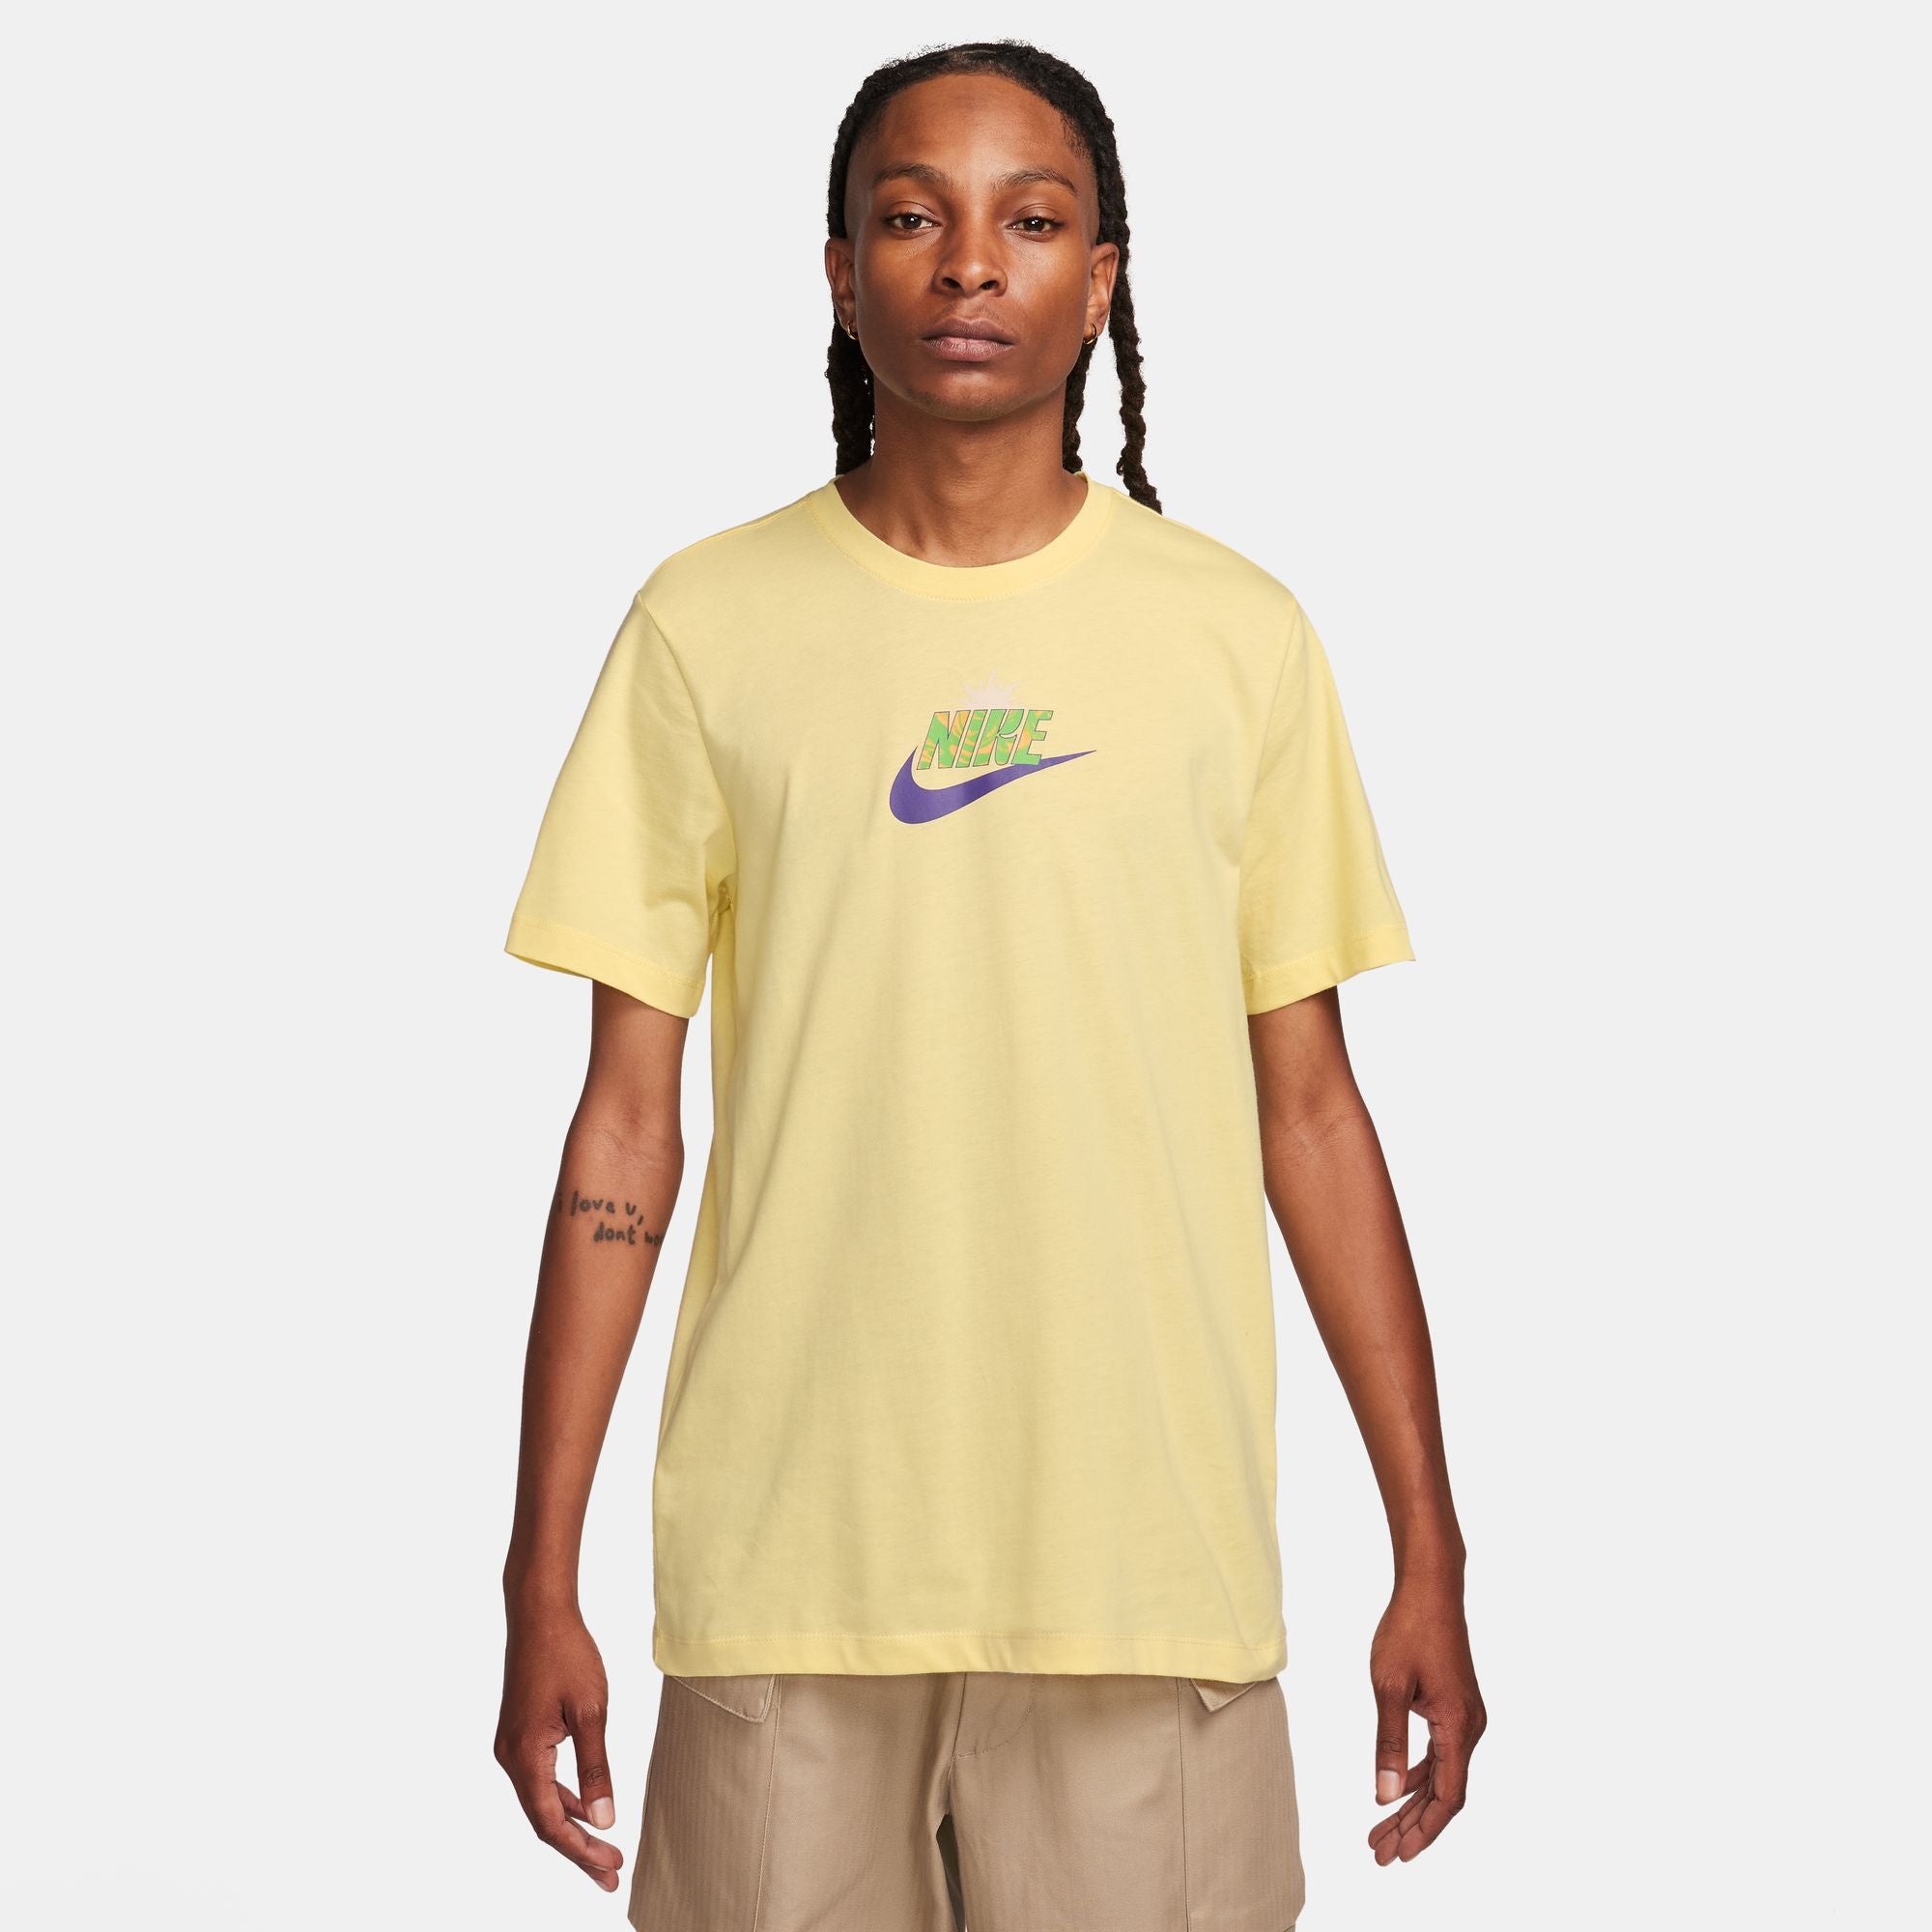 NSW Spring Break T-Shirt (Soft Yellow)